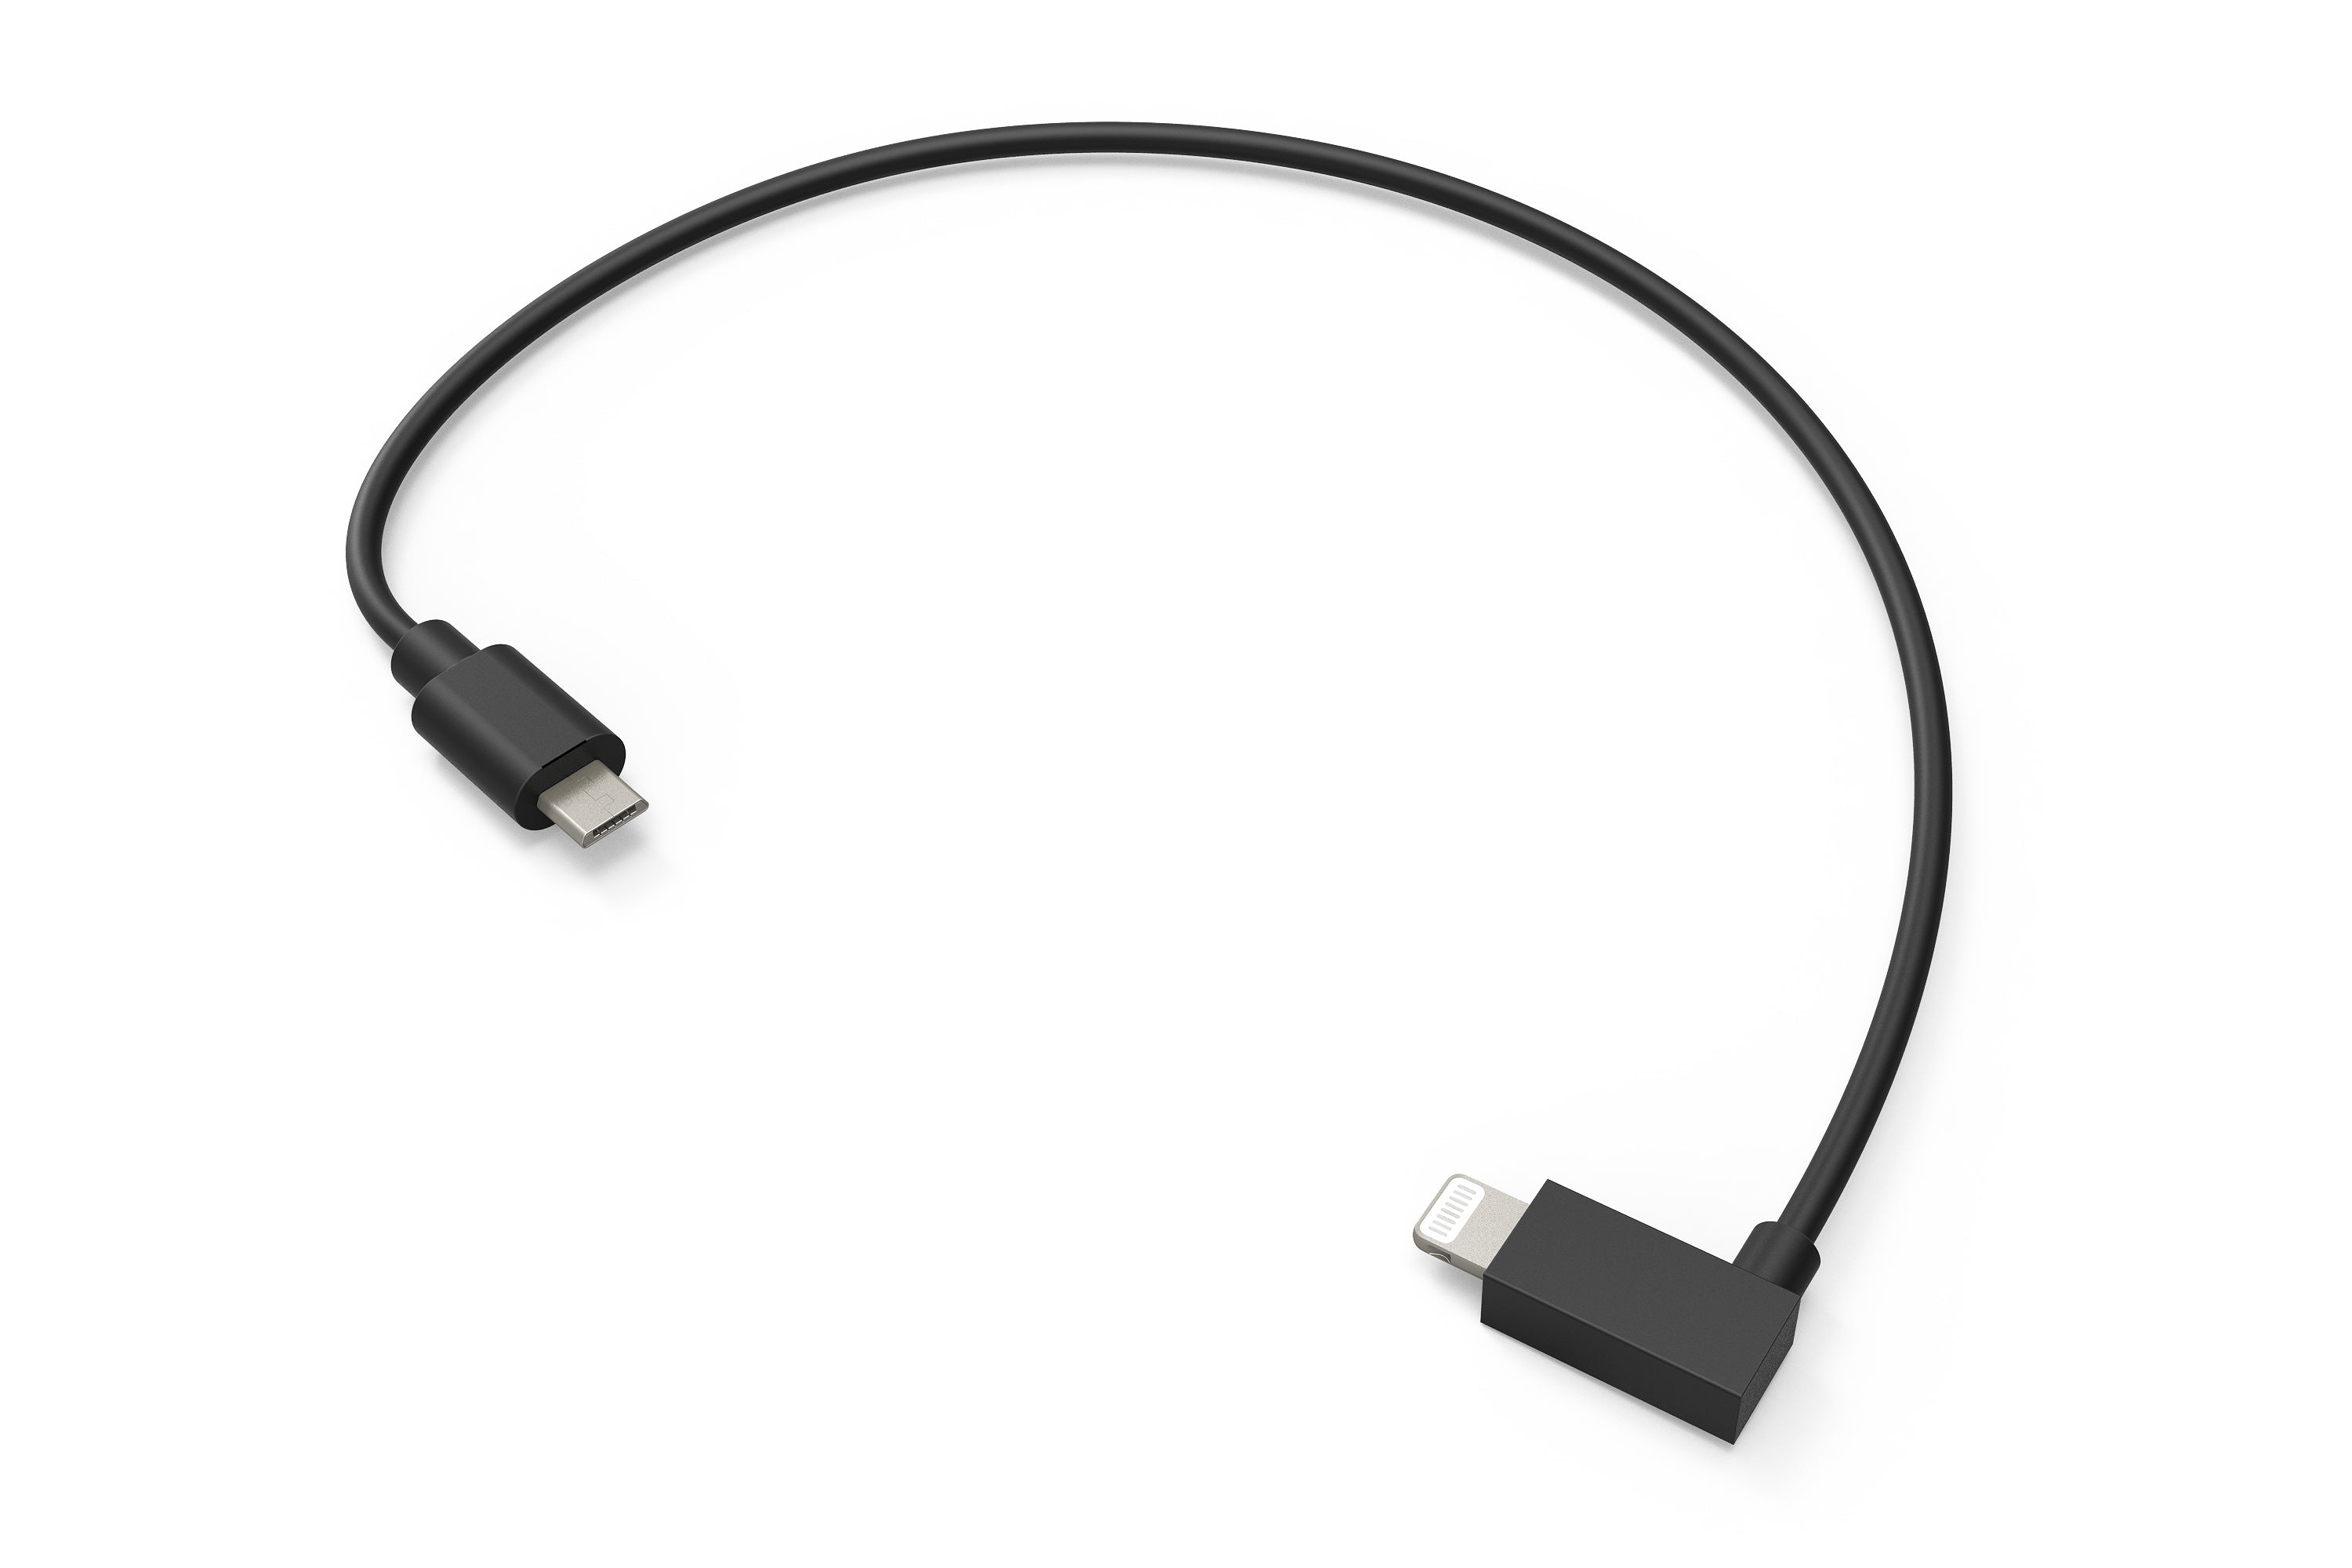 Gigabit + PoE Adapter with LIghtning Cord (1M) for iPad | Modern Hardware